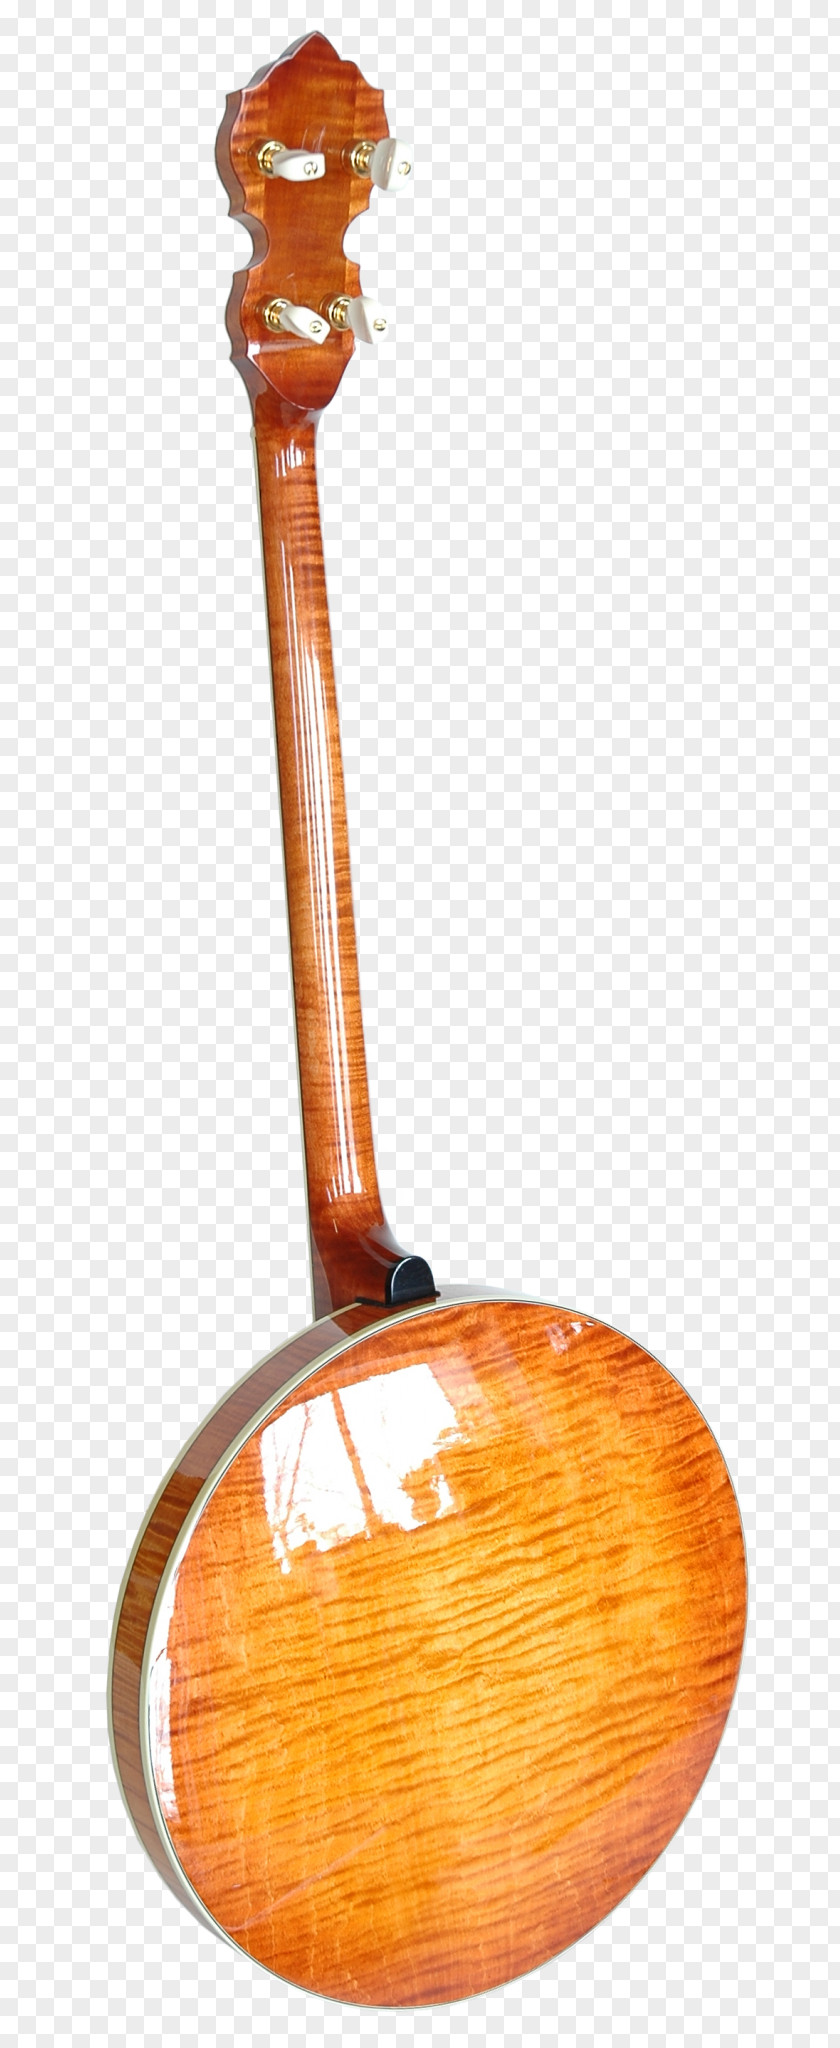 Musical Instruments Banjo Guitar Uke Clawhammer PNG